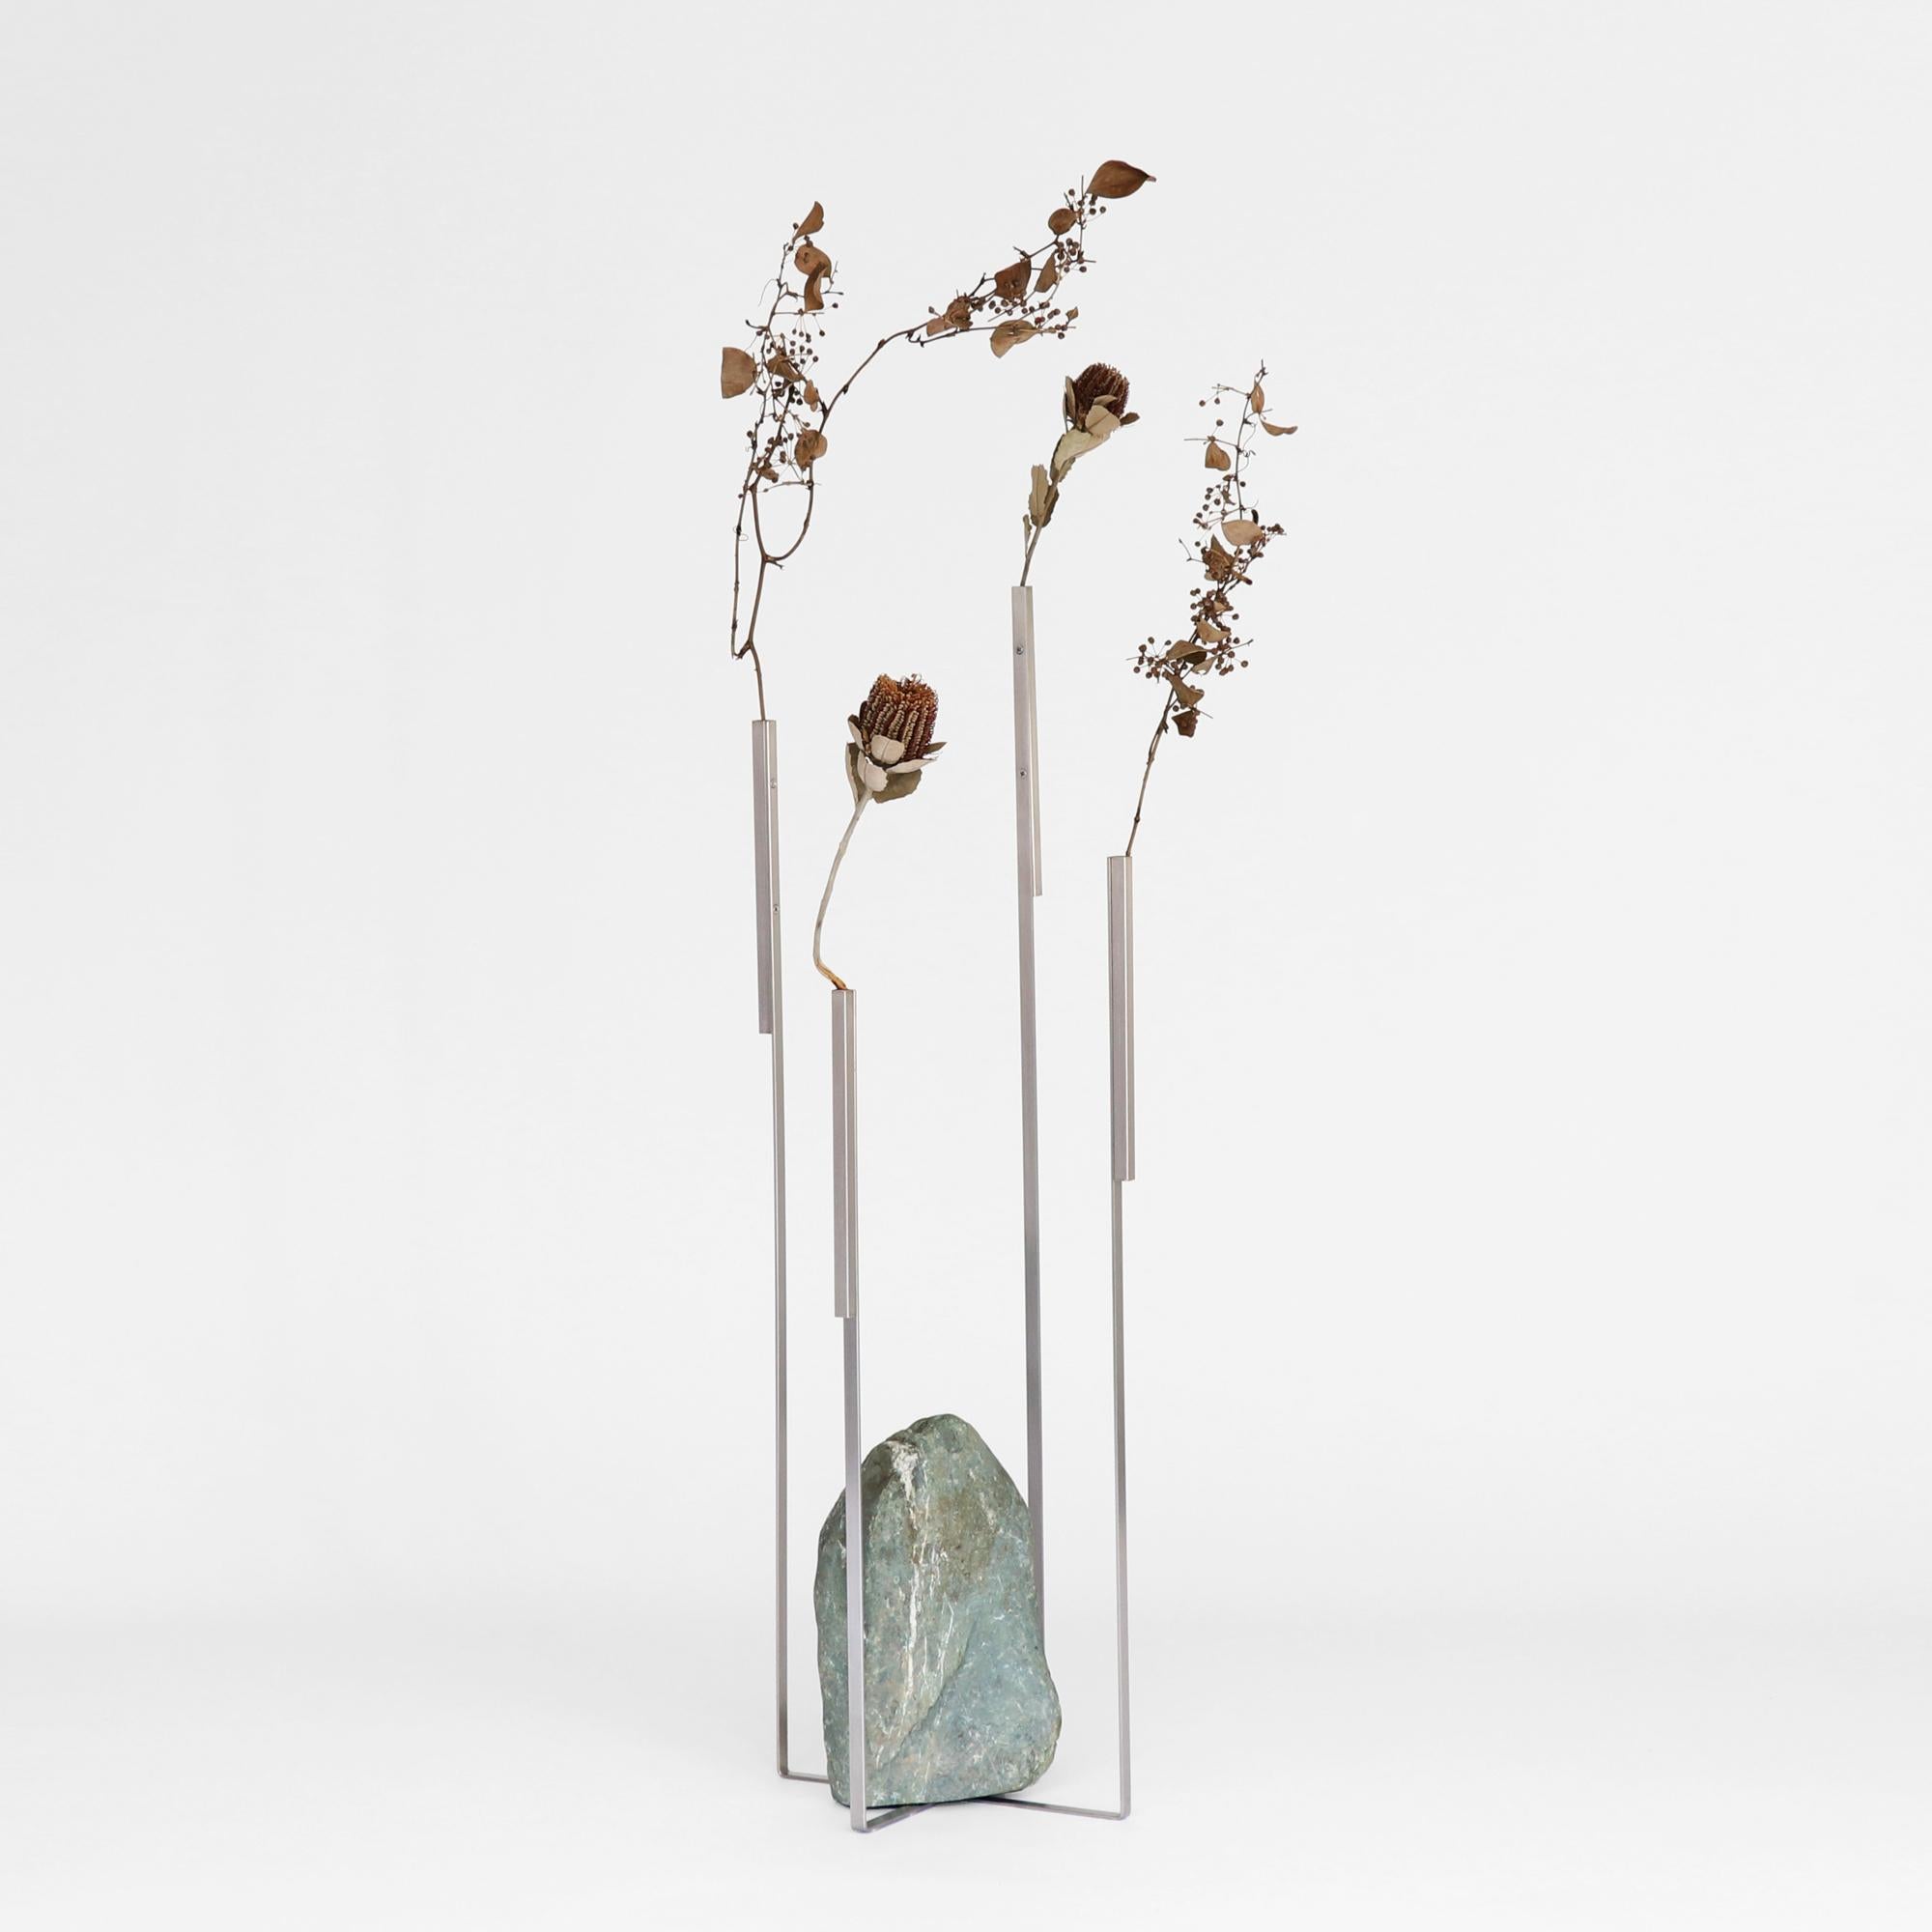 Hong Kong Odd Balance 01 Sculptural Vase Batten and Kamp Minimalist For Sale